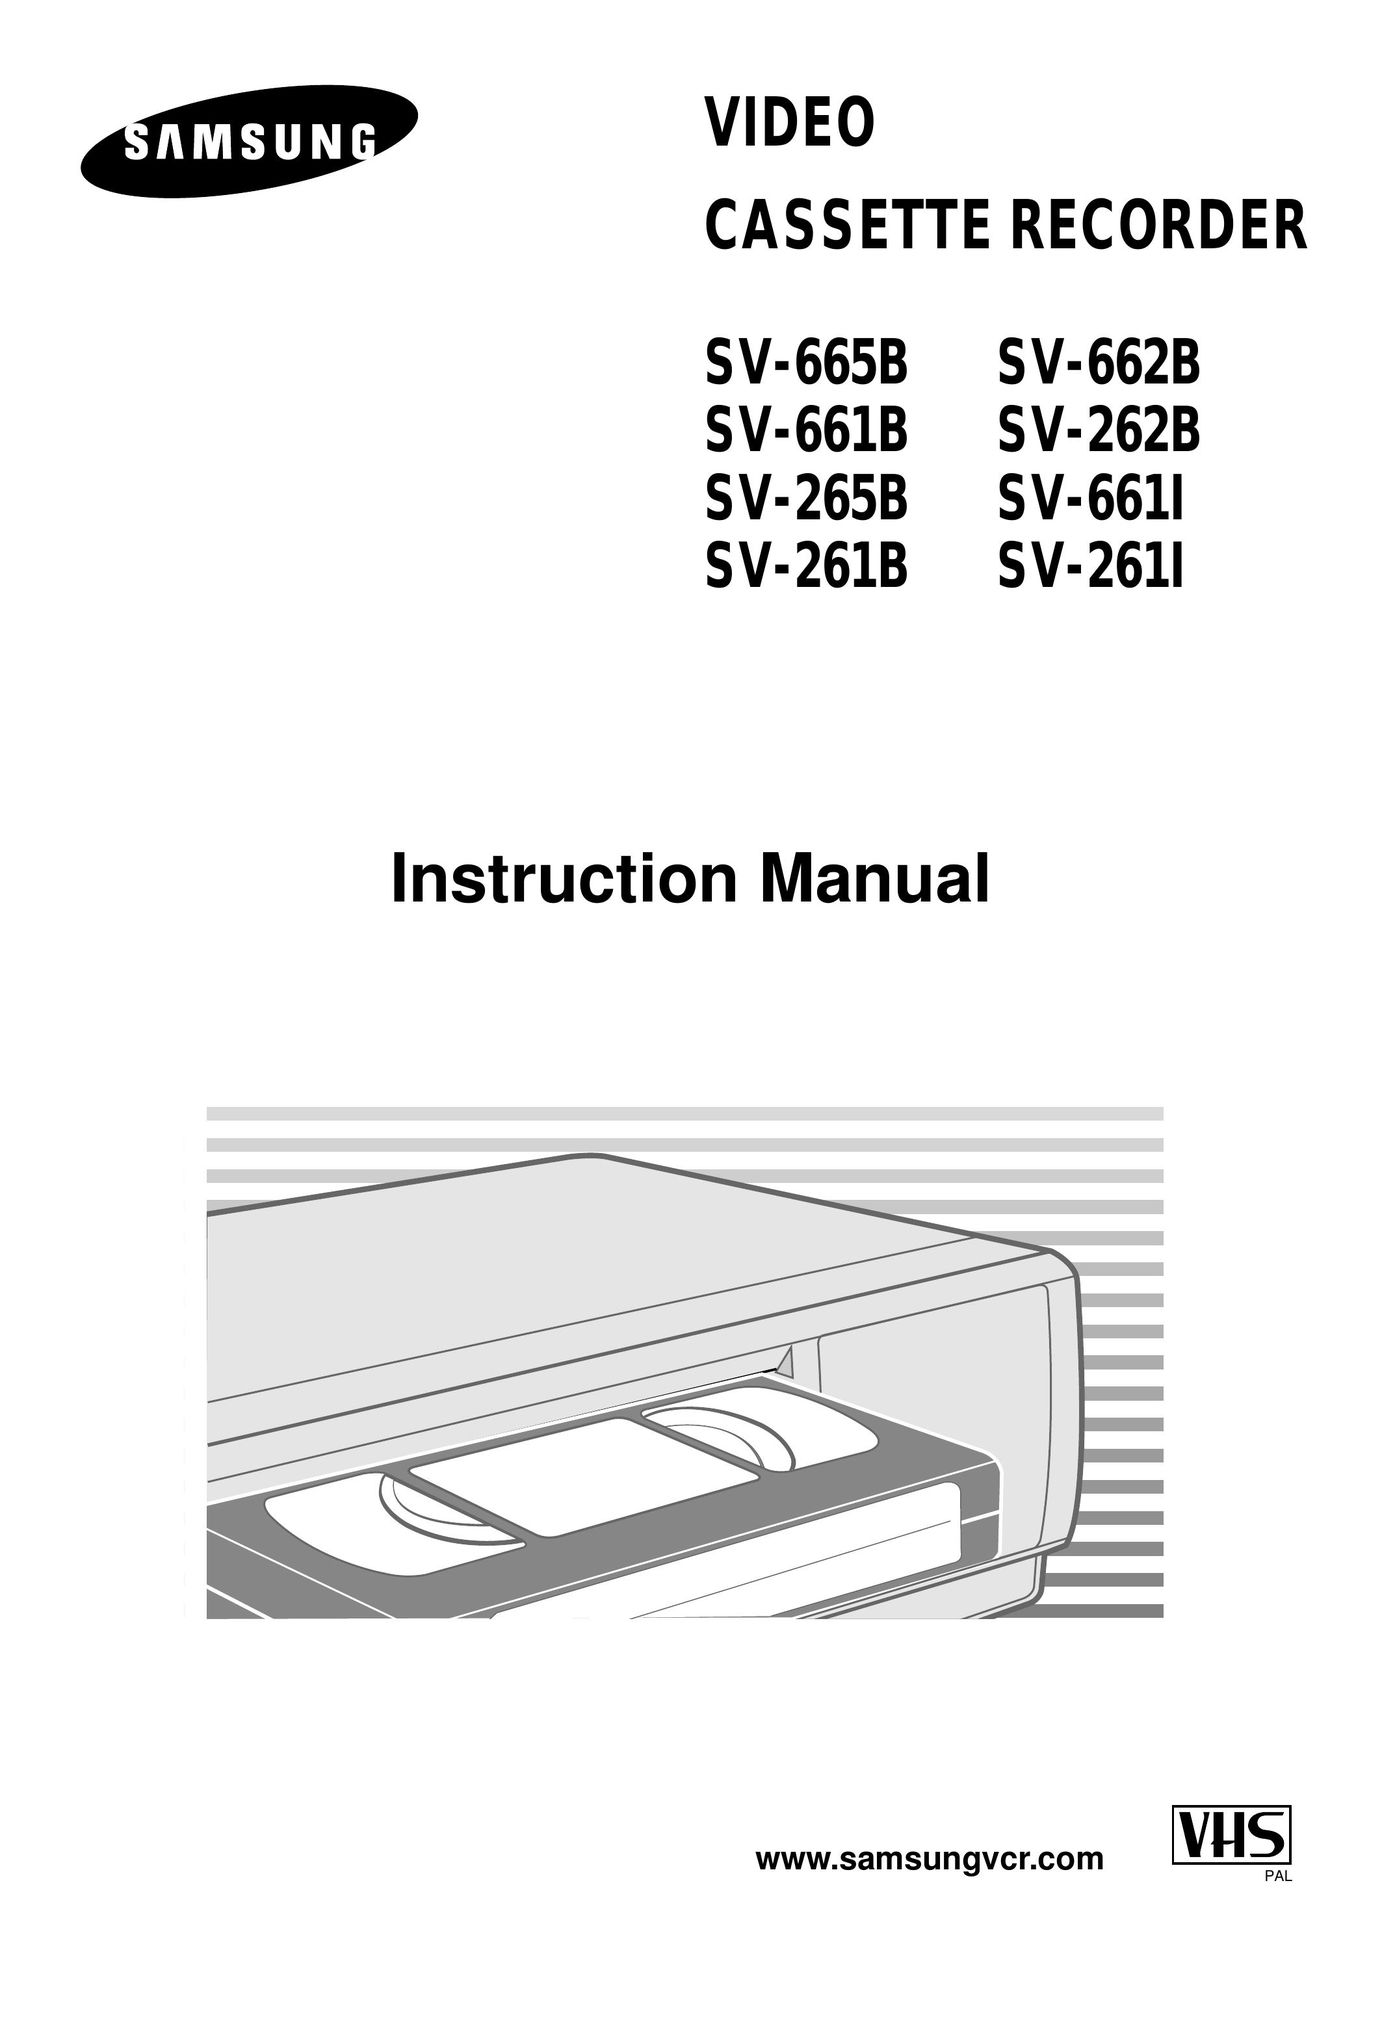 Samsung SV-262B VCR User Manual